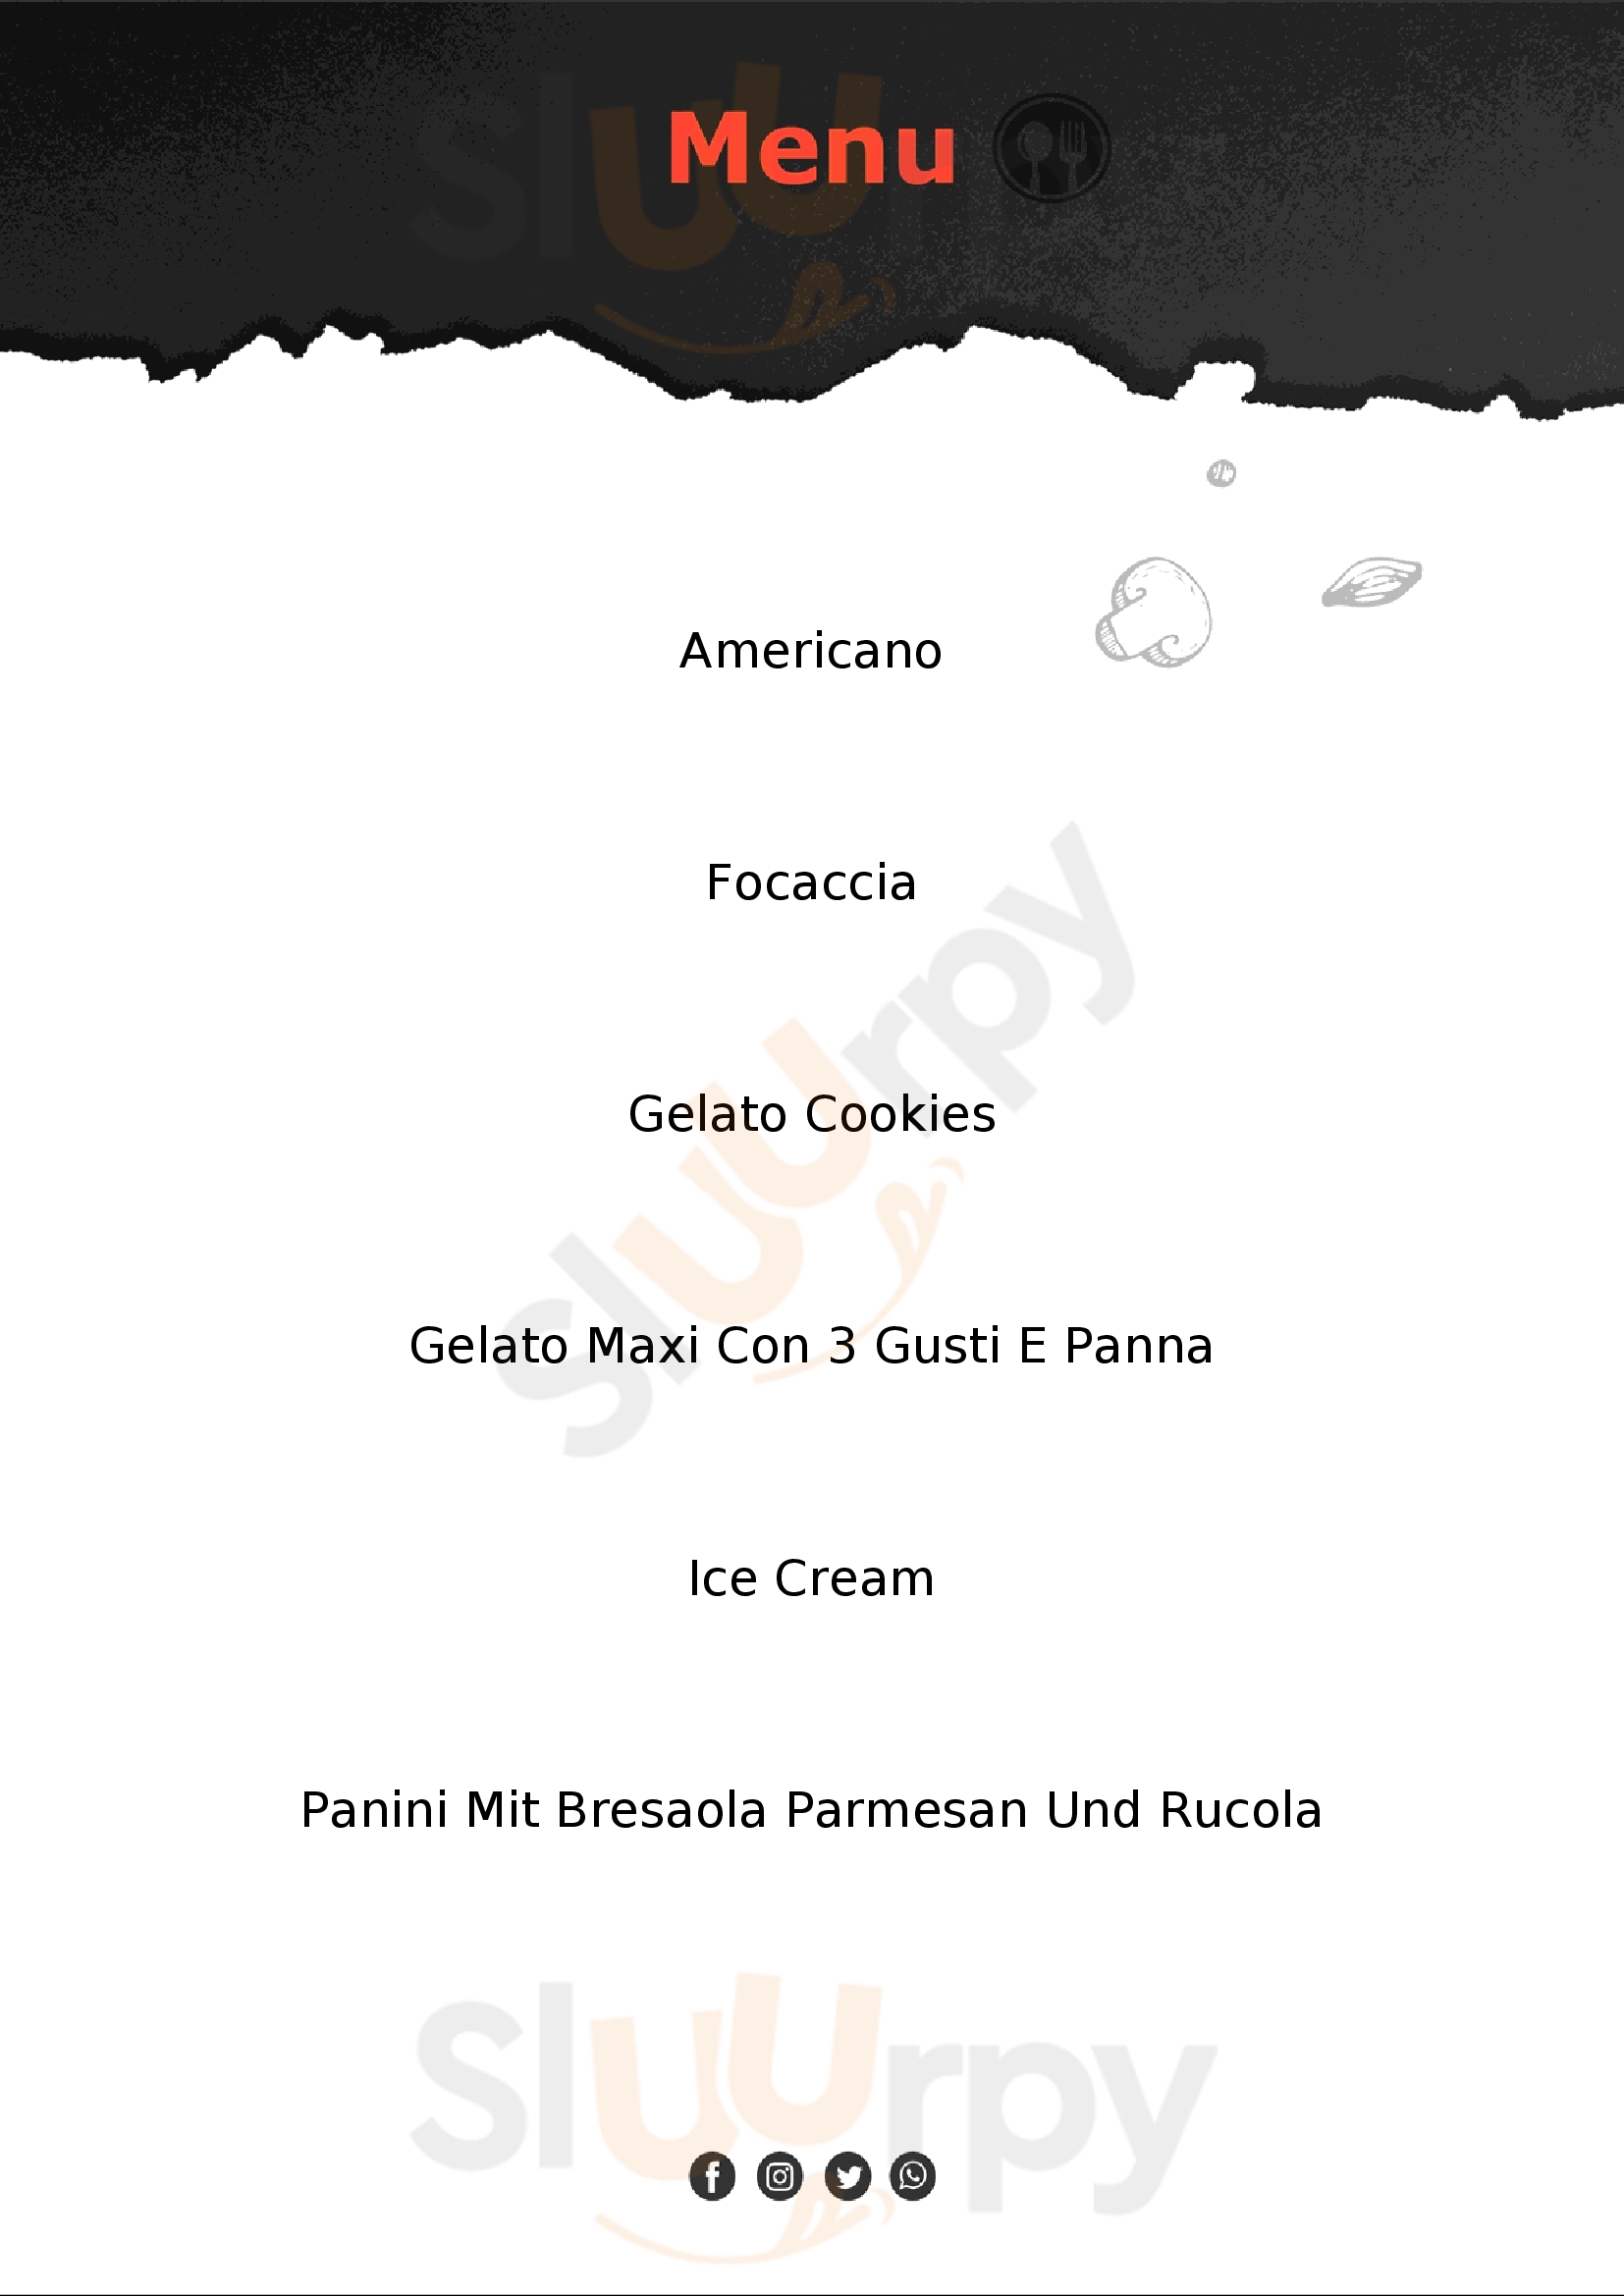 Snack Bar Glateria Mokalux Verona menù 1 pagina